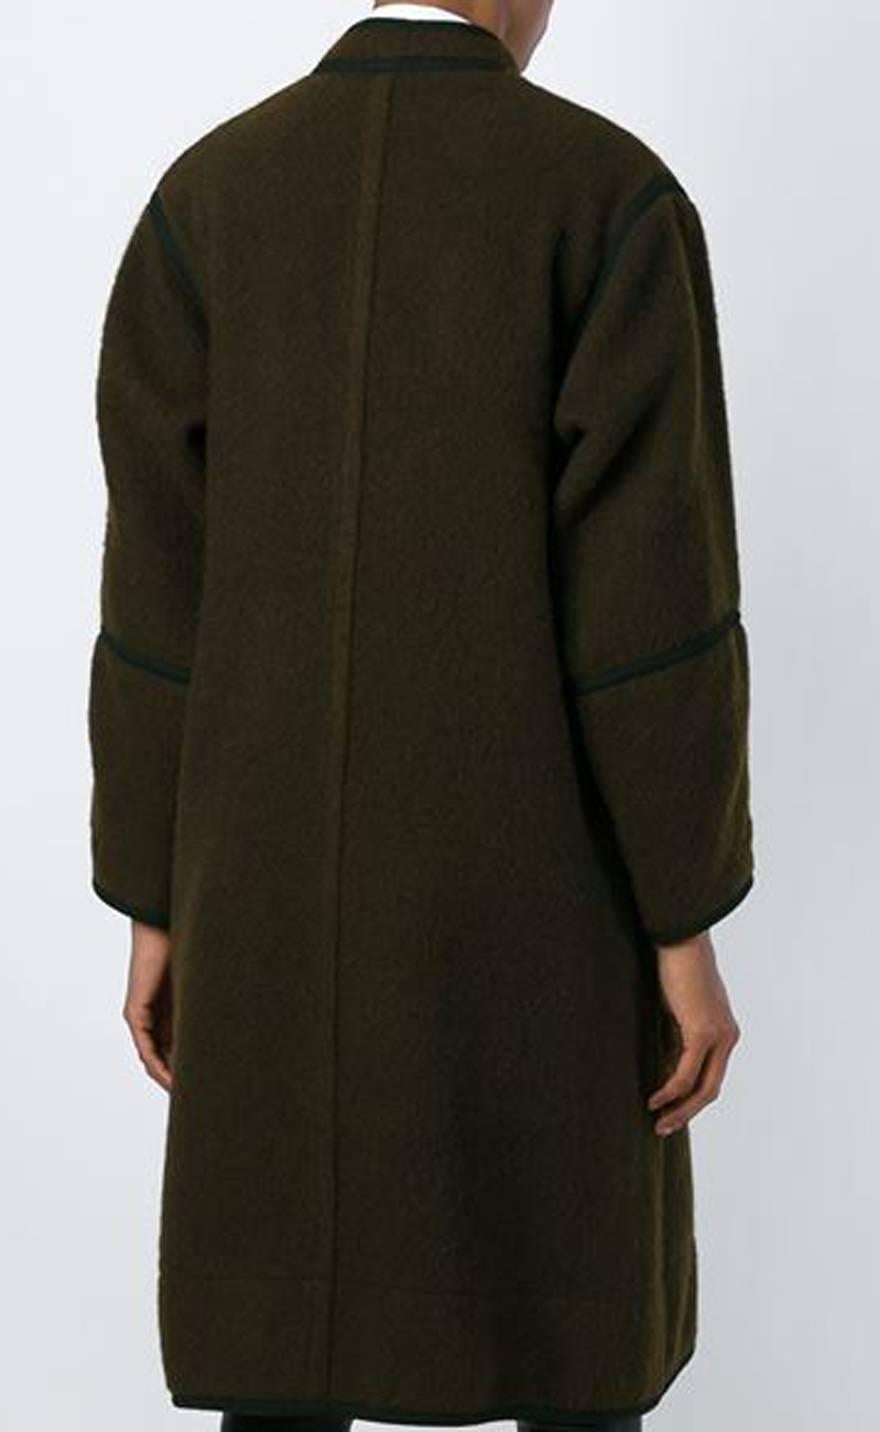 Iconic YSL Yves Saint Laurent brown mohair wool 